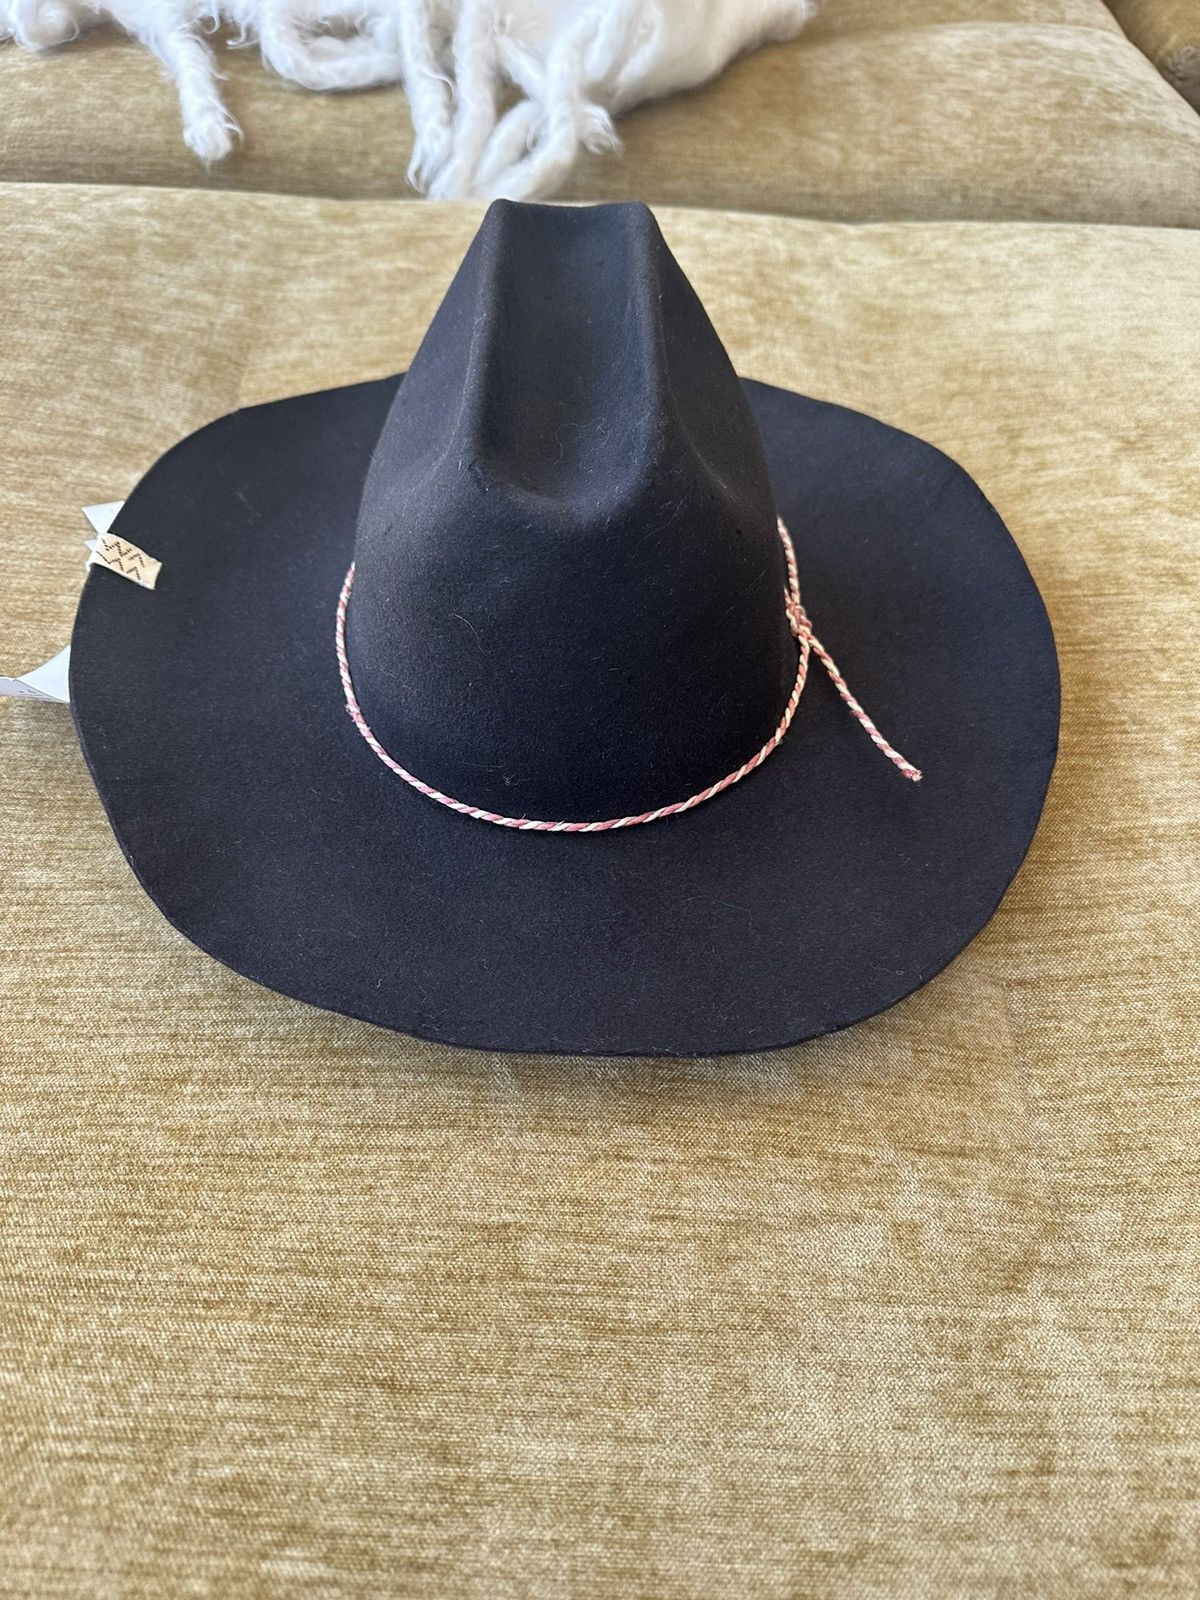 Visvim Visvim Vin Cowboy Hat Black M/L | Grailed